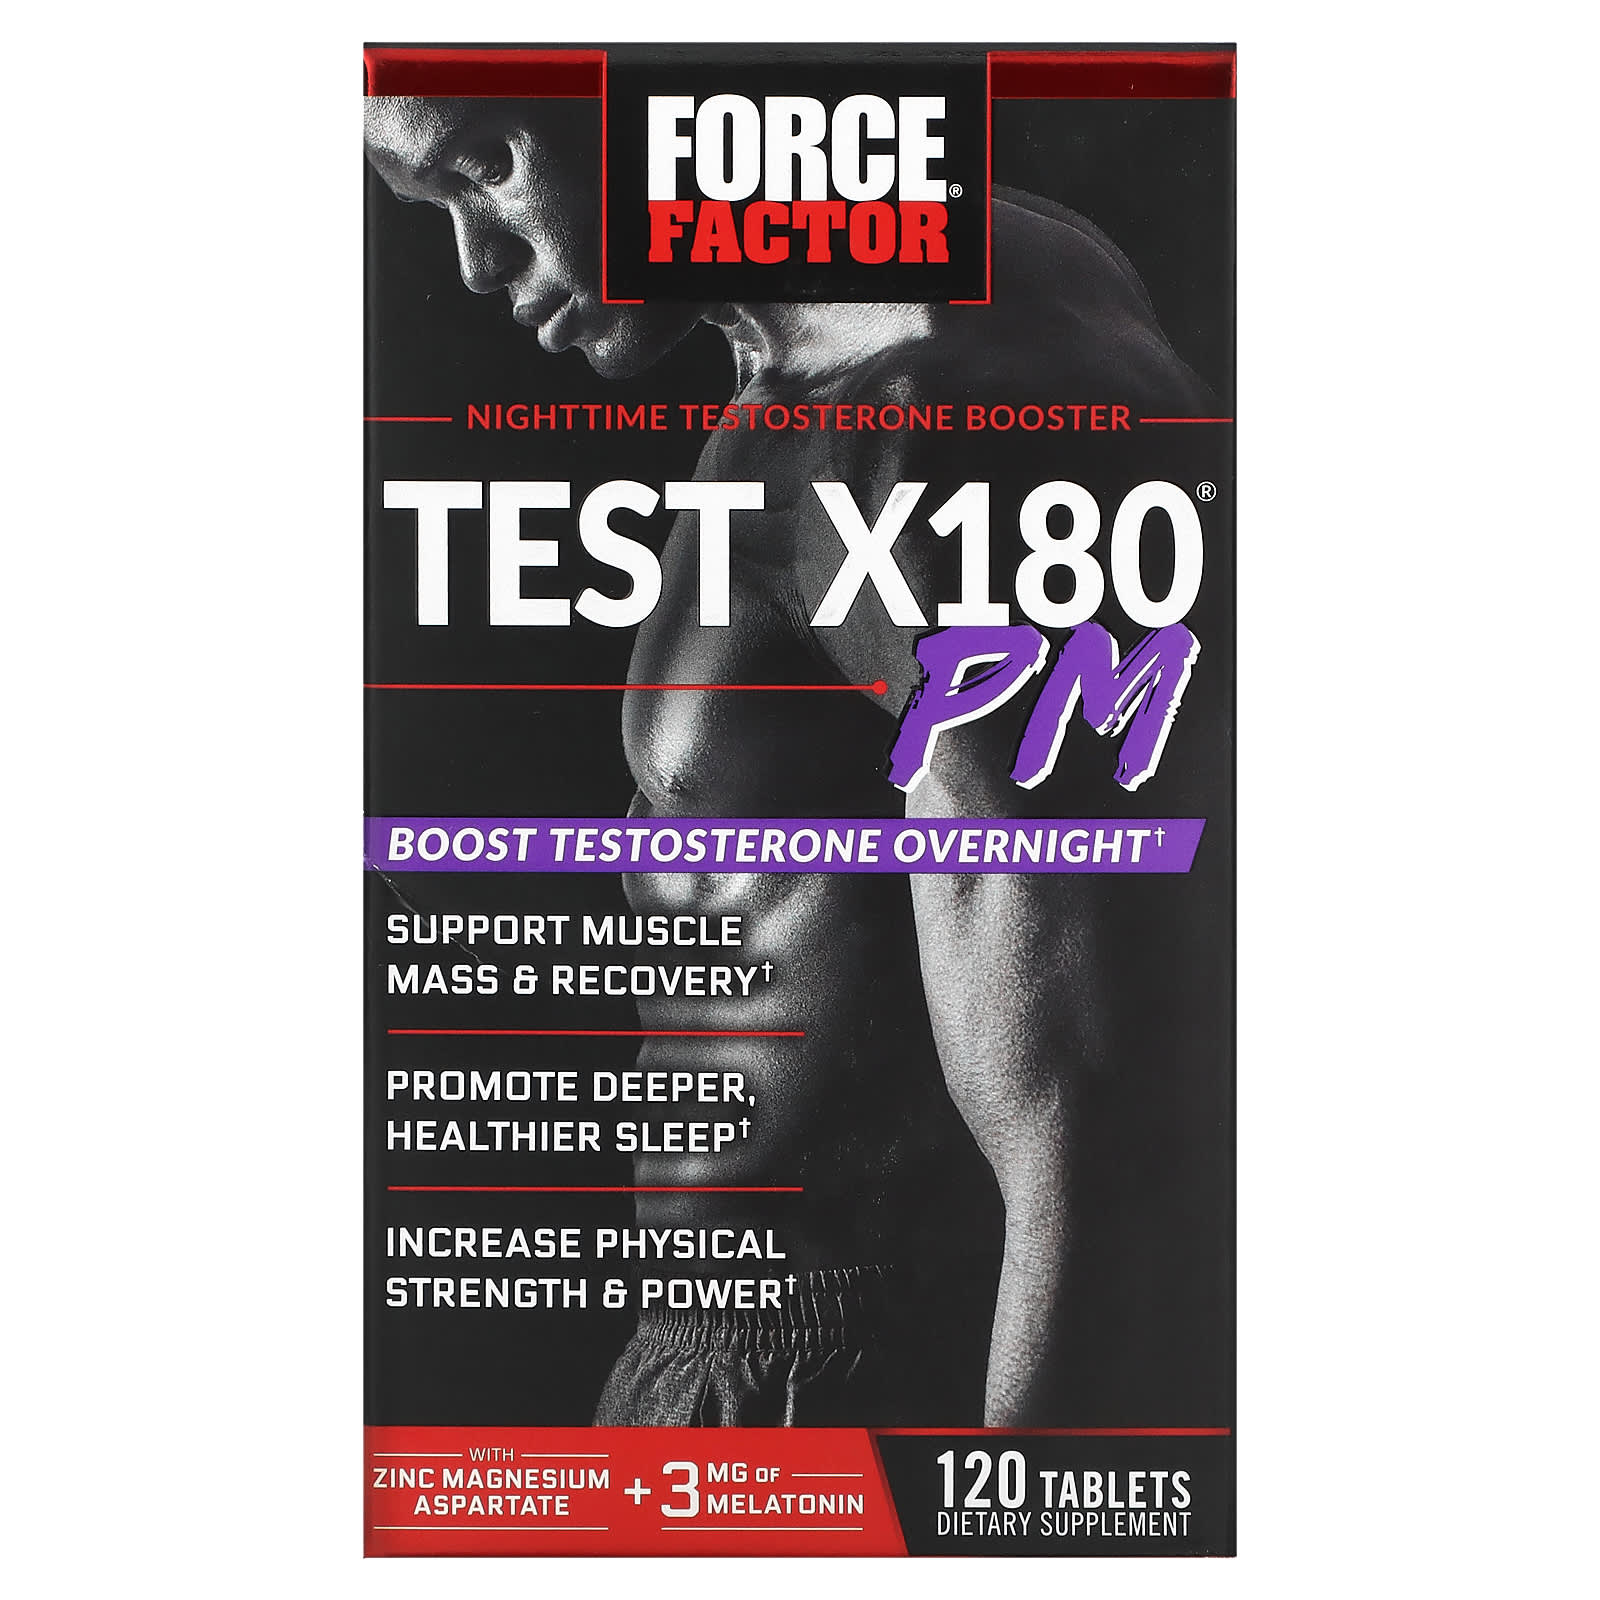 Ночной Бустер Тестостерона Force Factor, 120 таблеток force factor amazing ashwa 120 таблеток